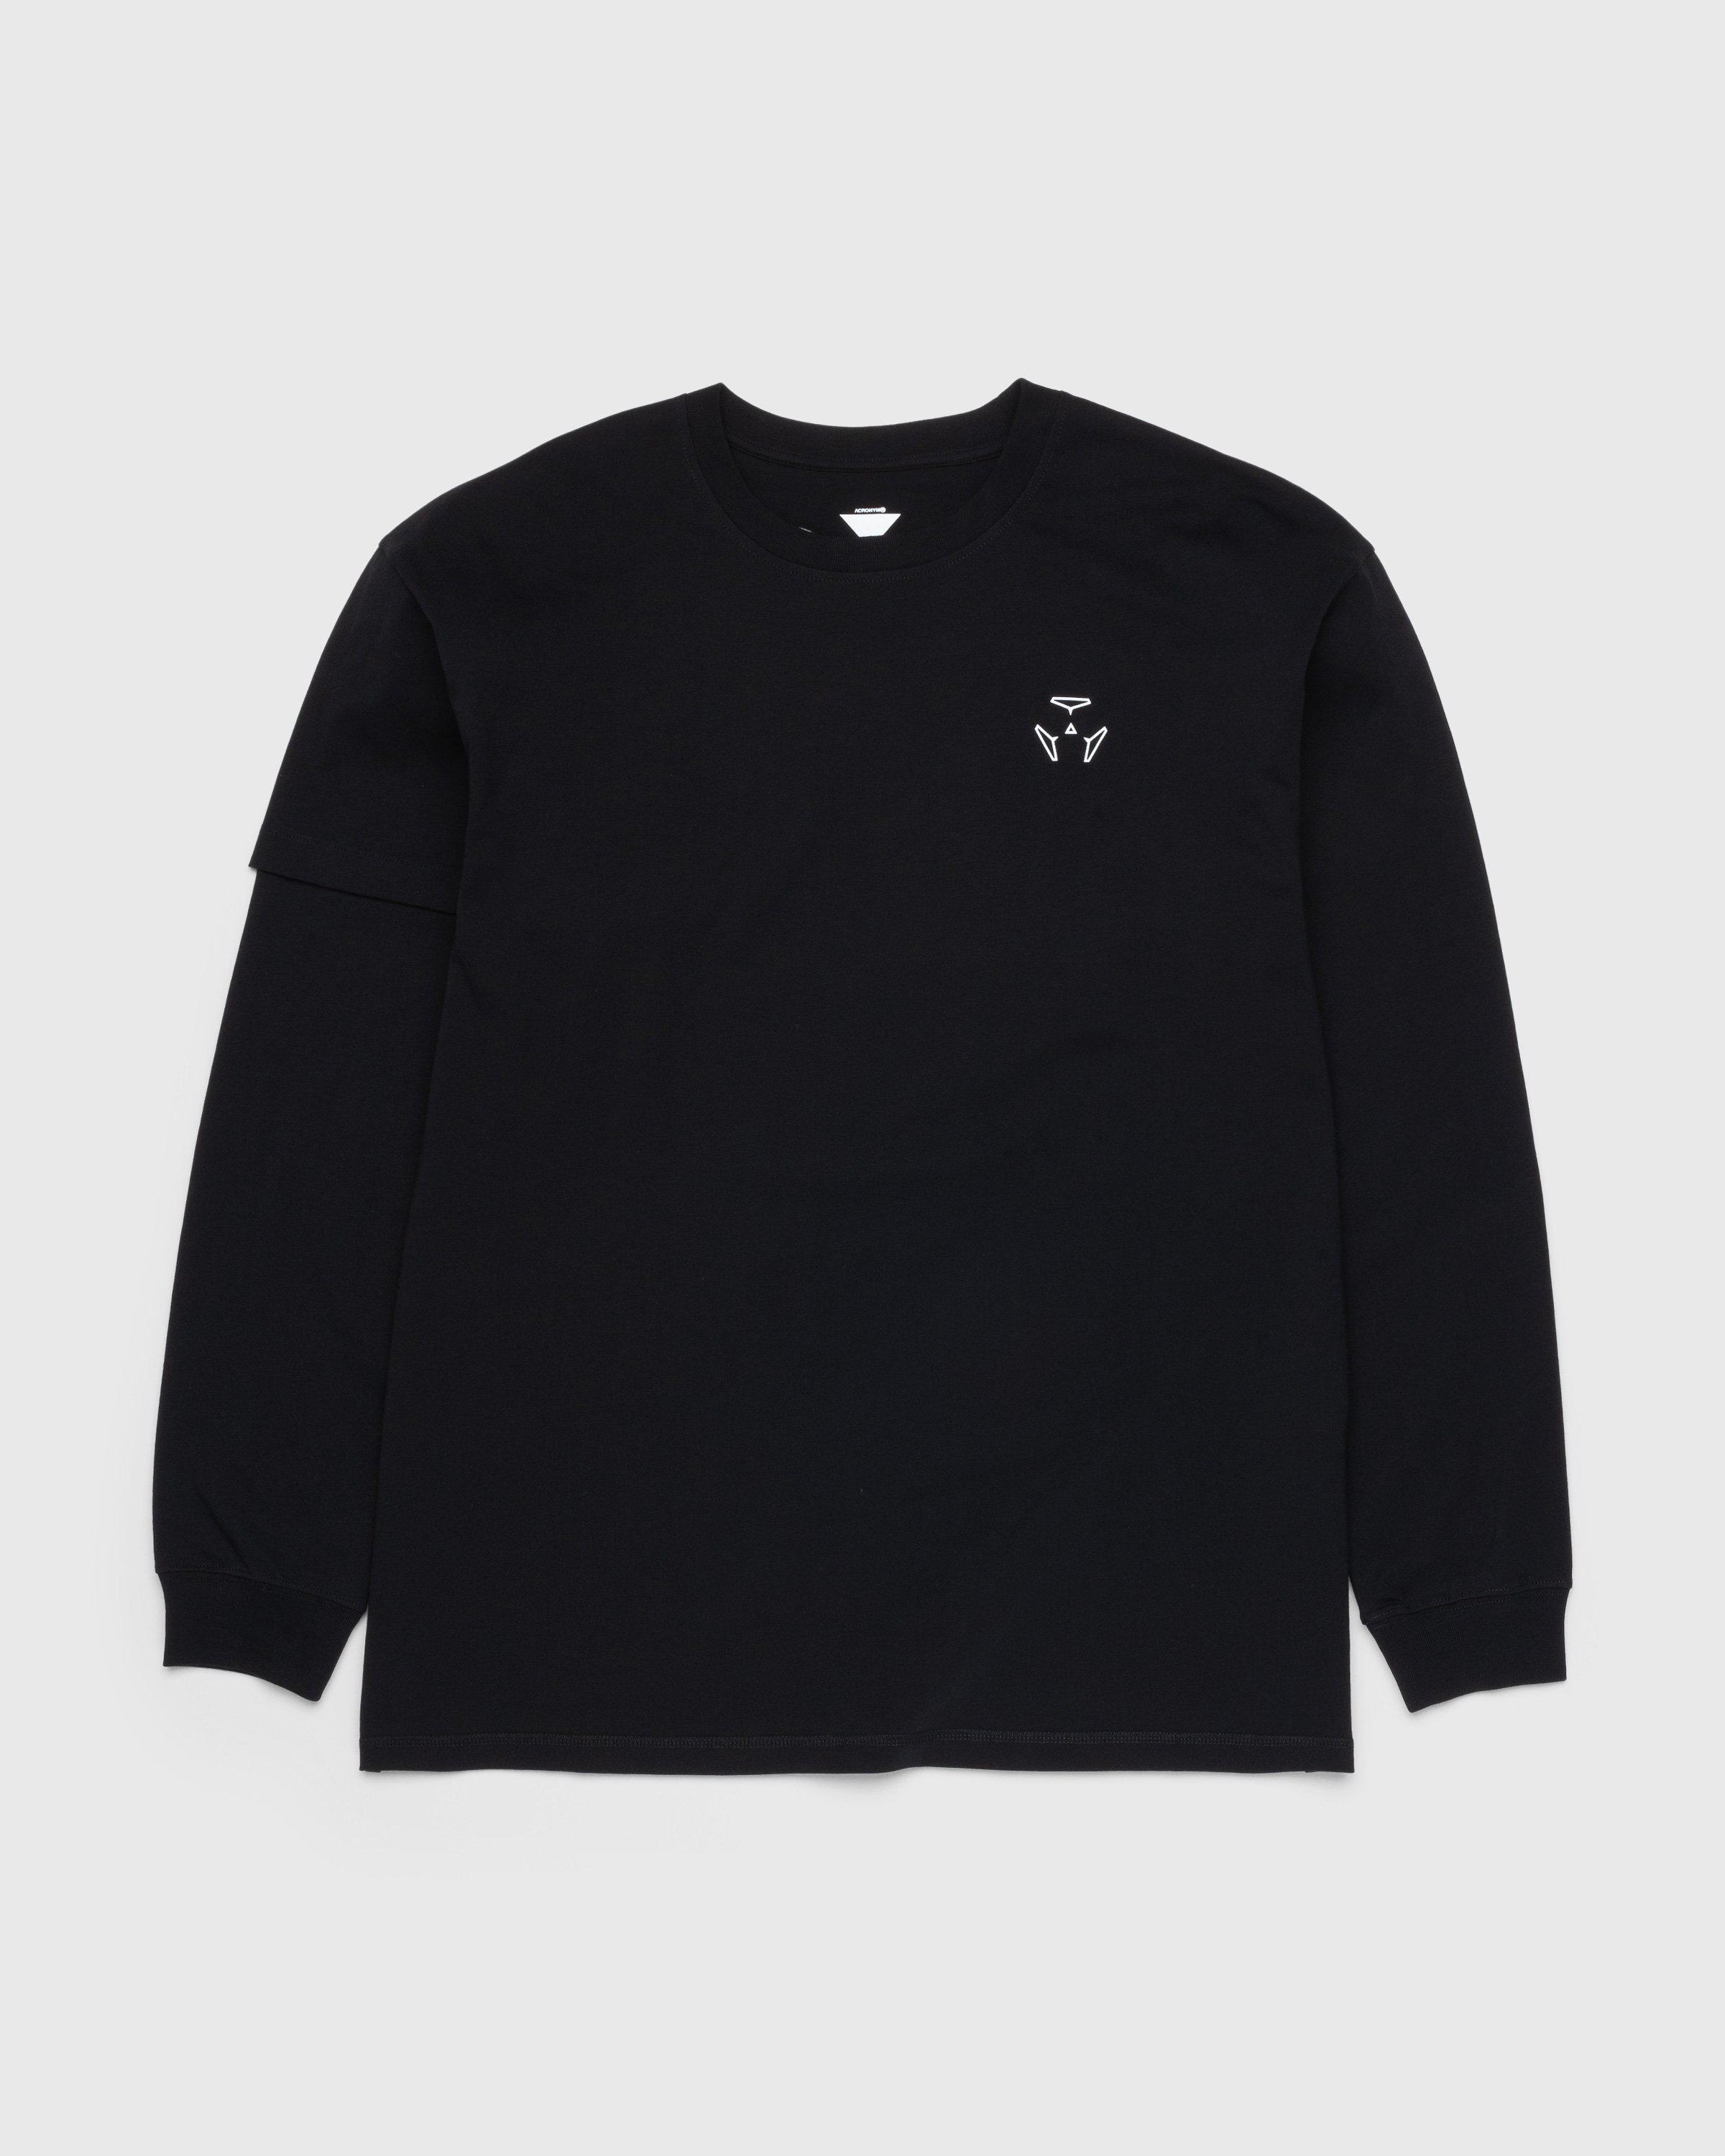 ACRONYM – S29-PR-A Organic Cotton Longsleeve T-Shirt Black by ACRONYM